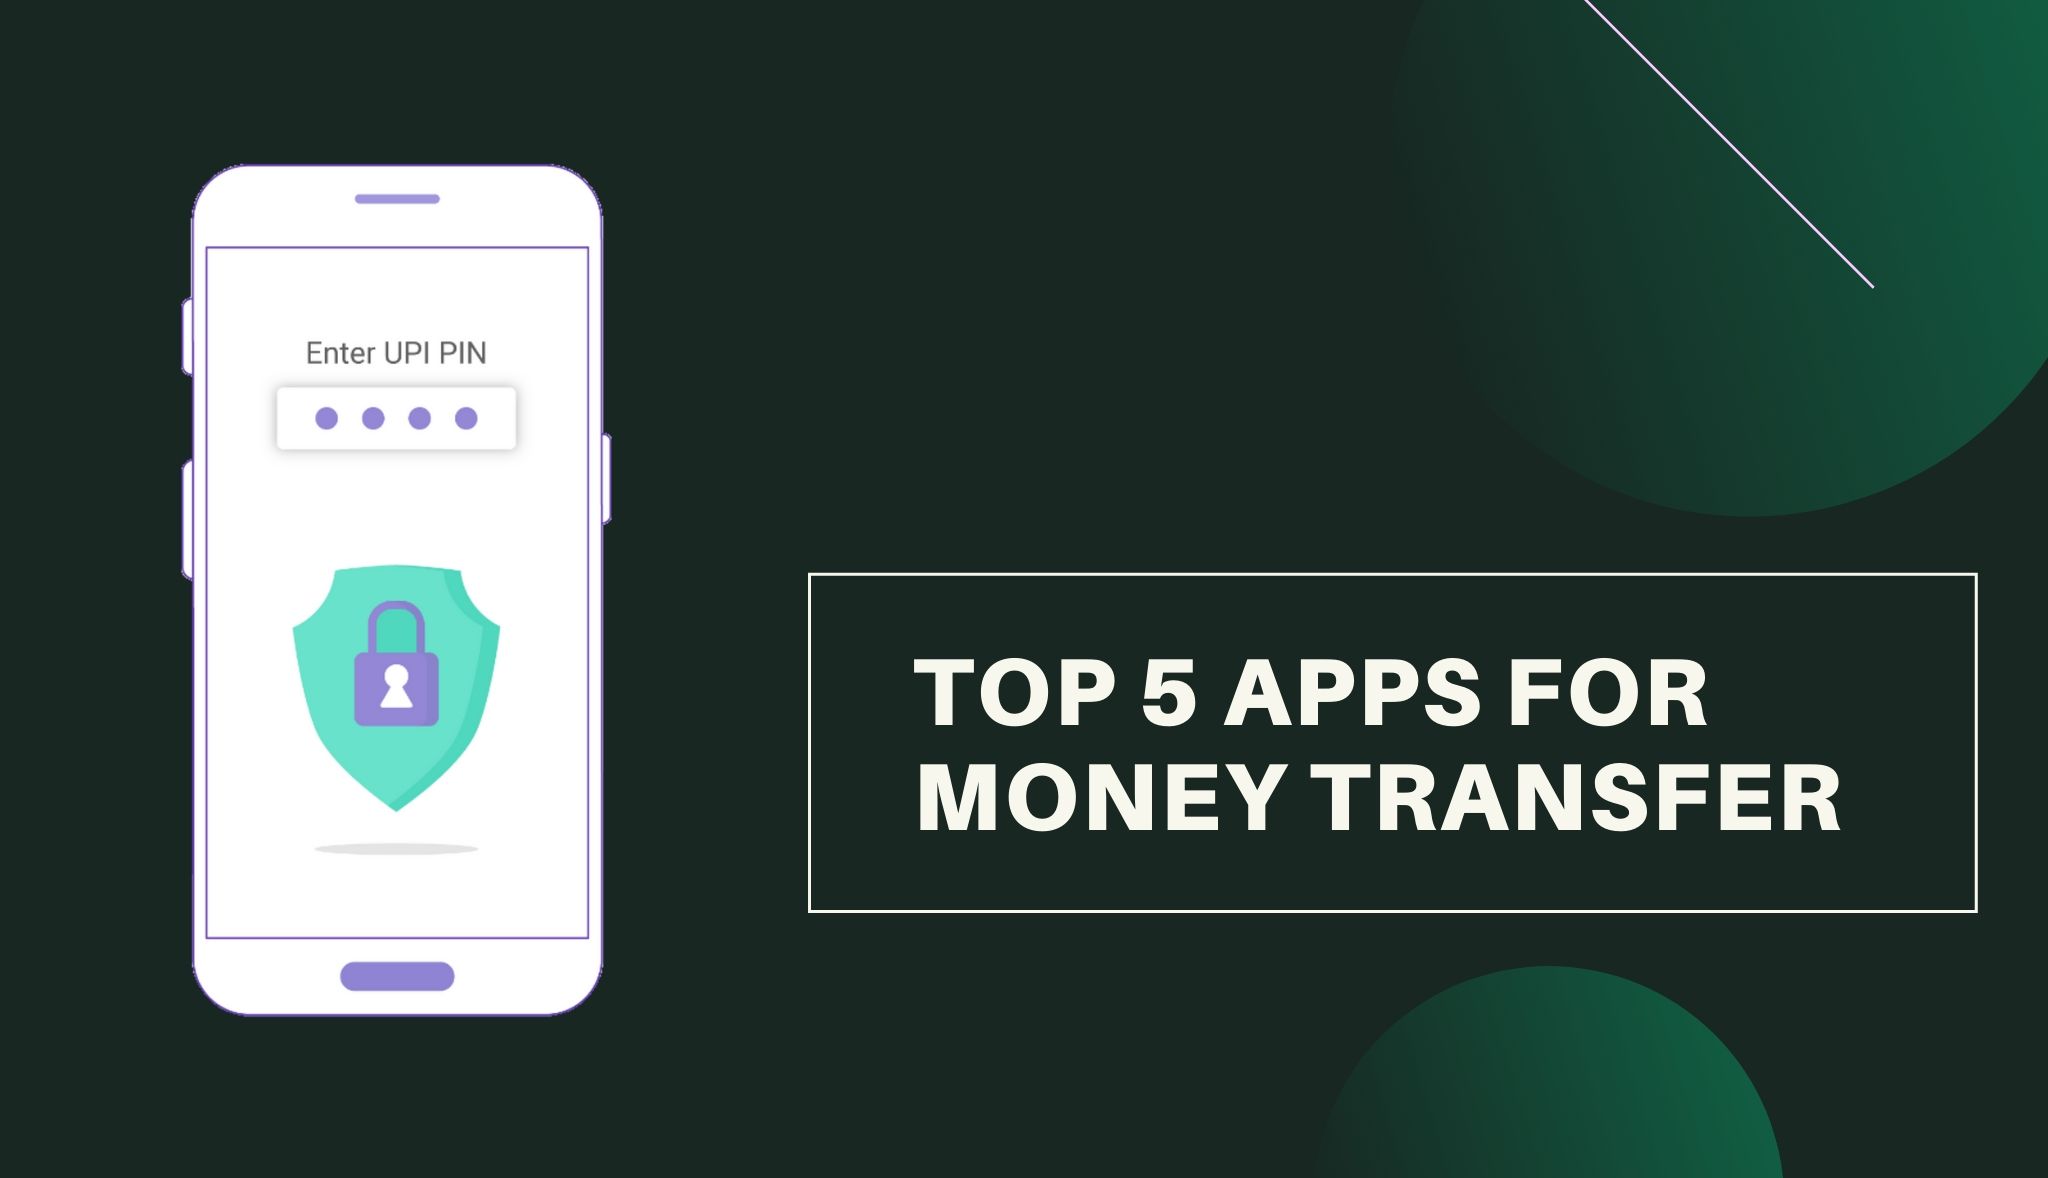 Top 5 Apps For Money Transfer